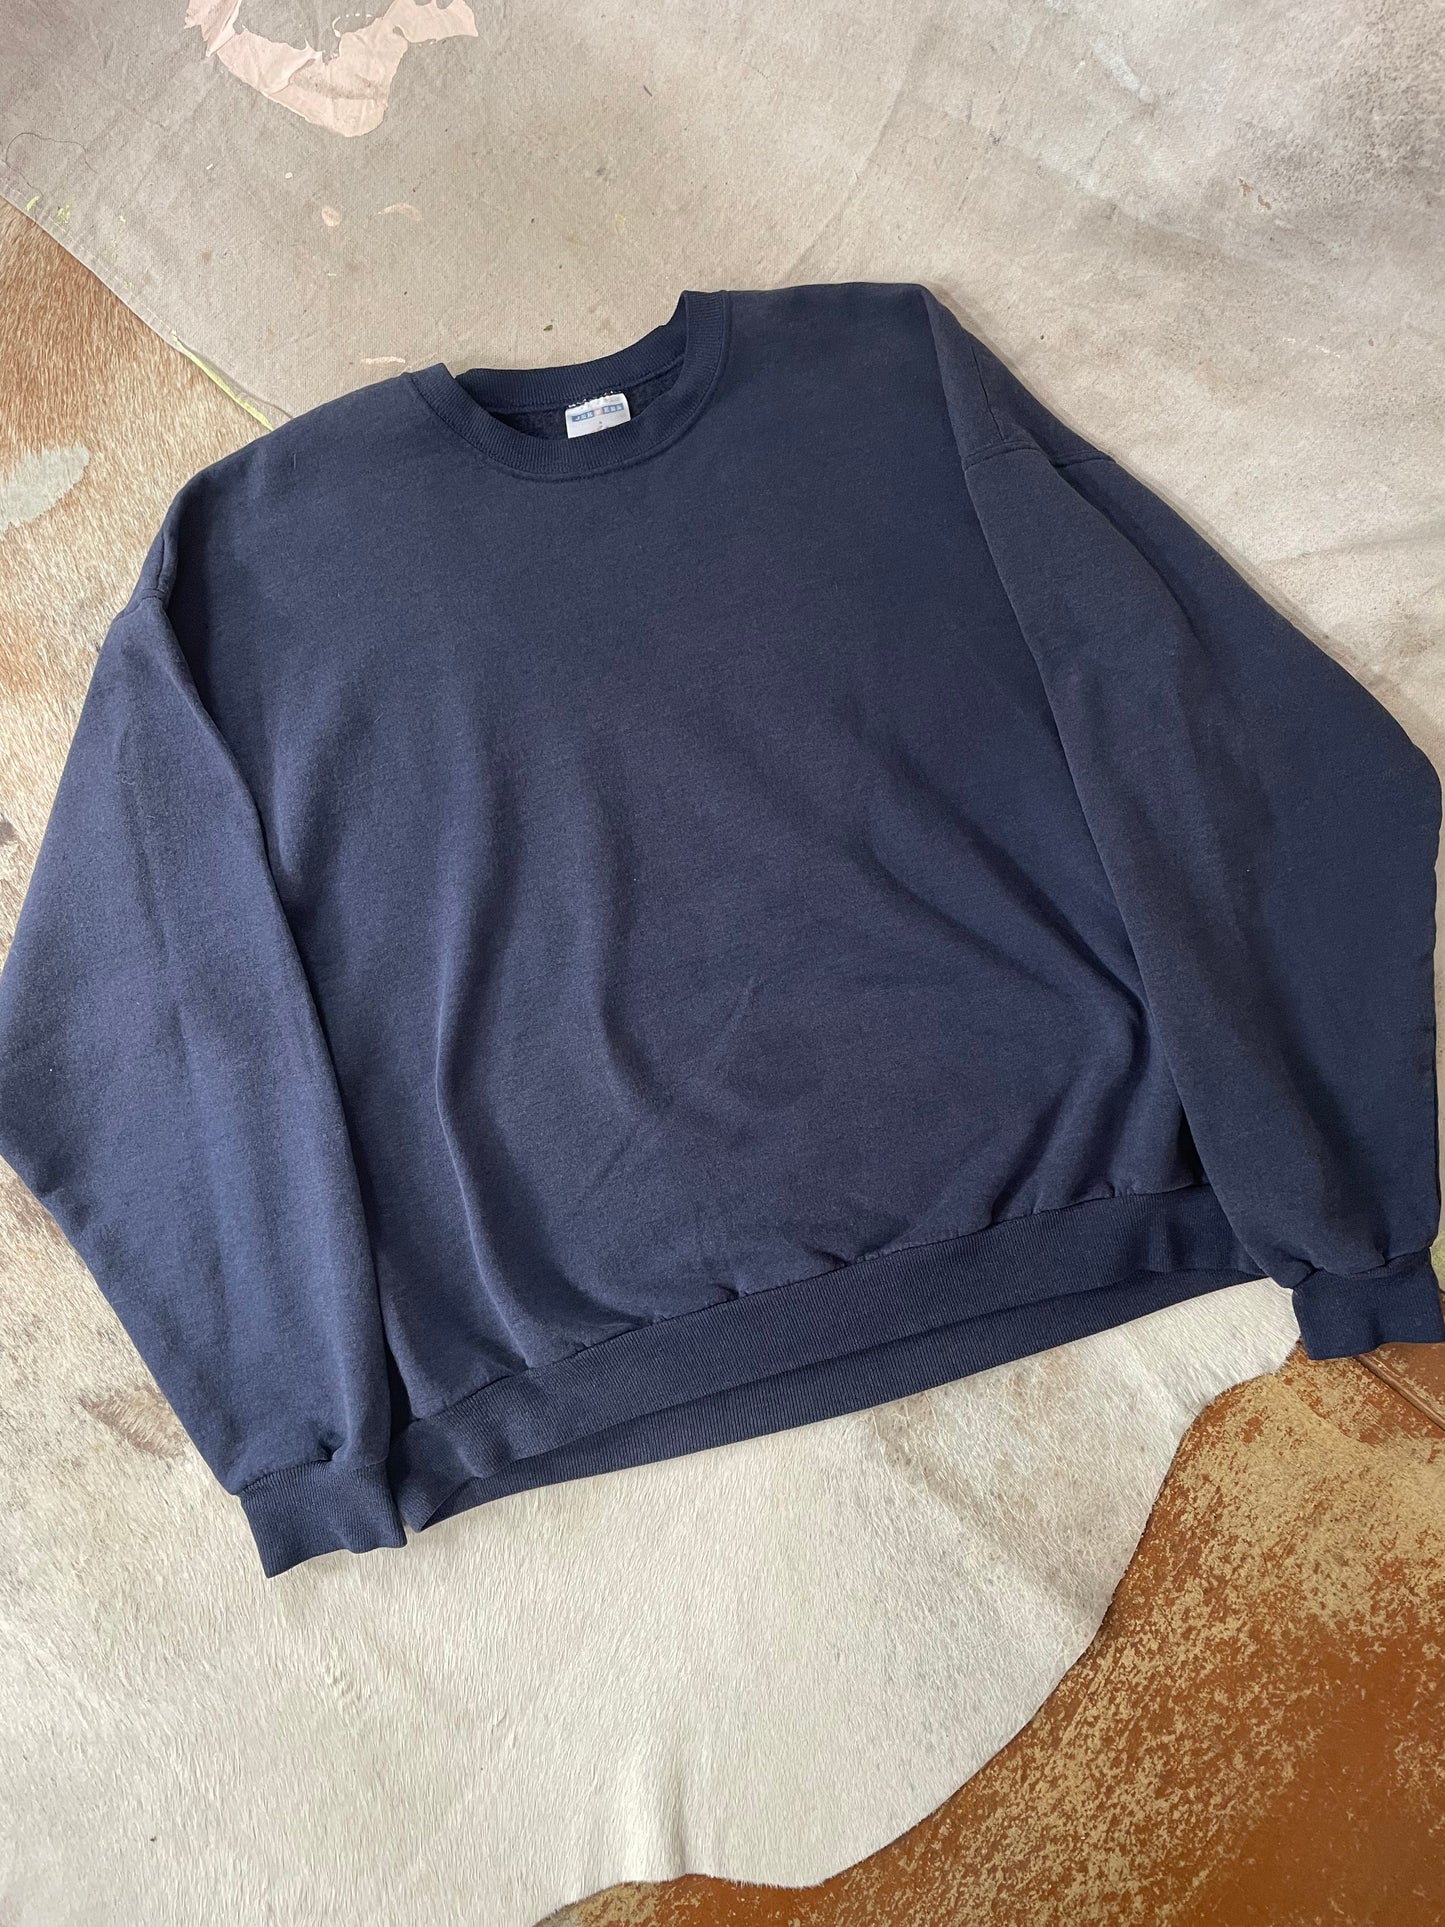 90s Jerzees Blank Navy Blue Sweatshirt